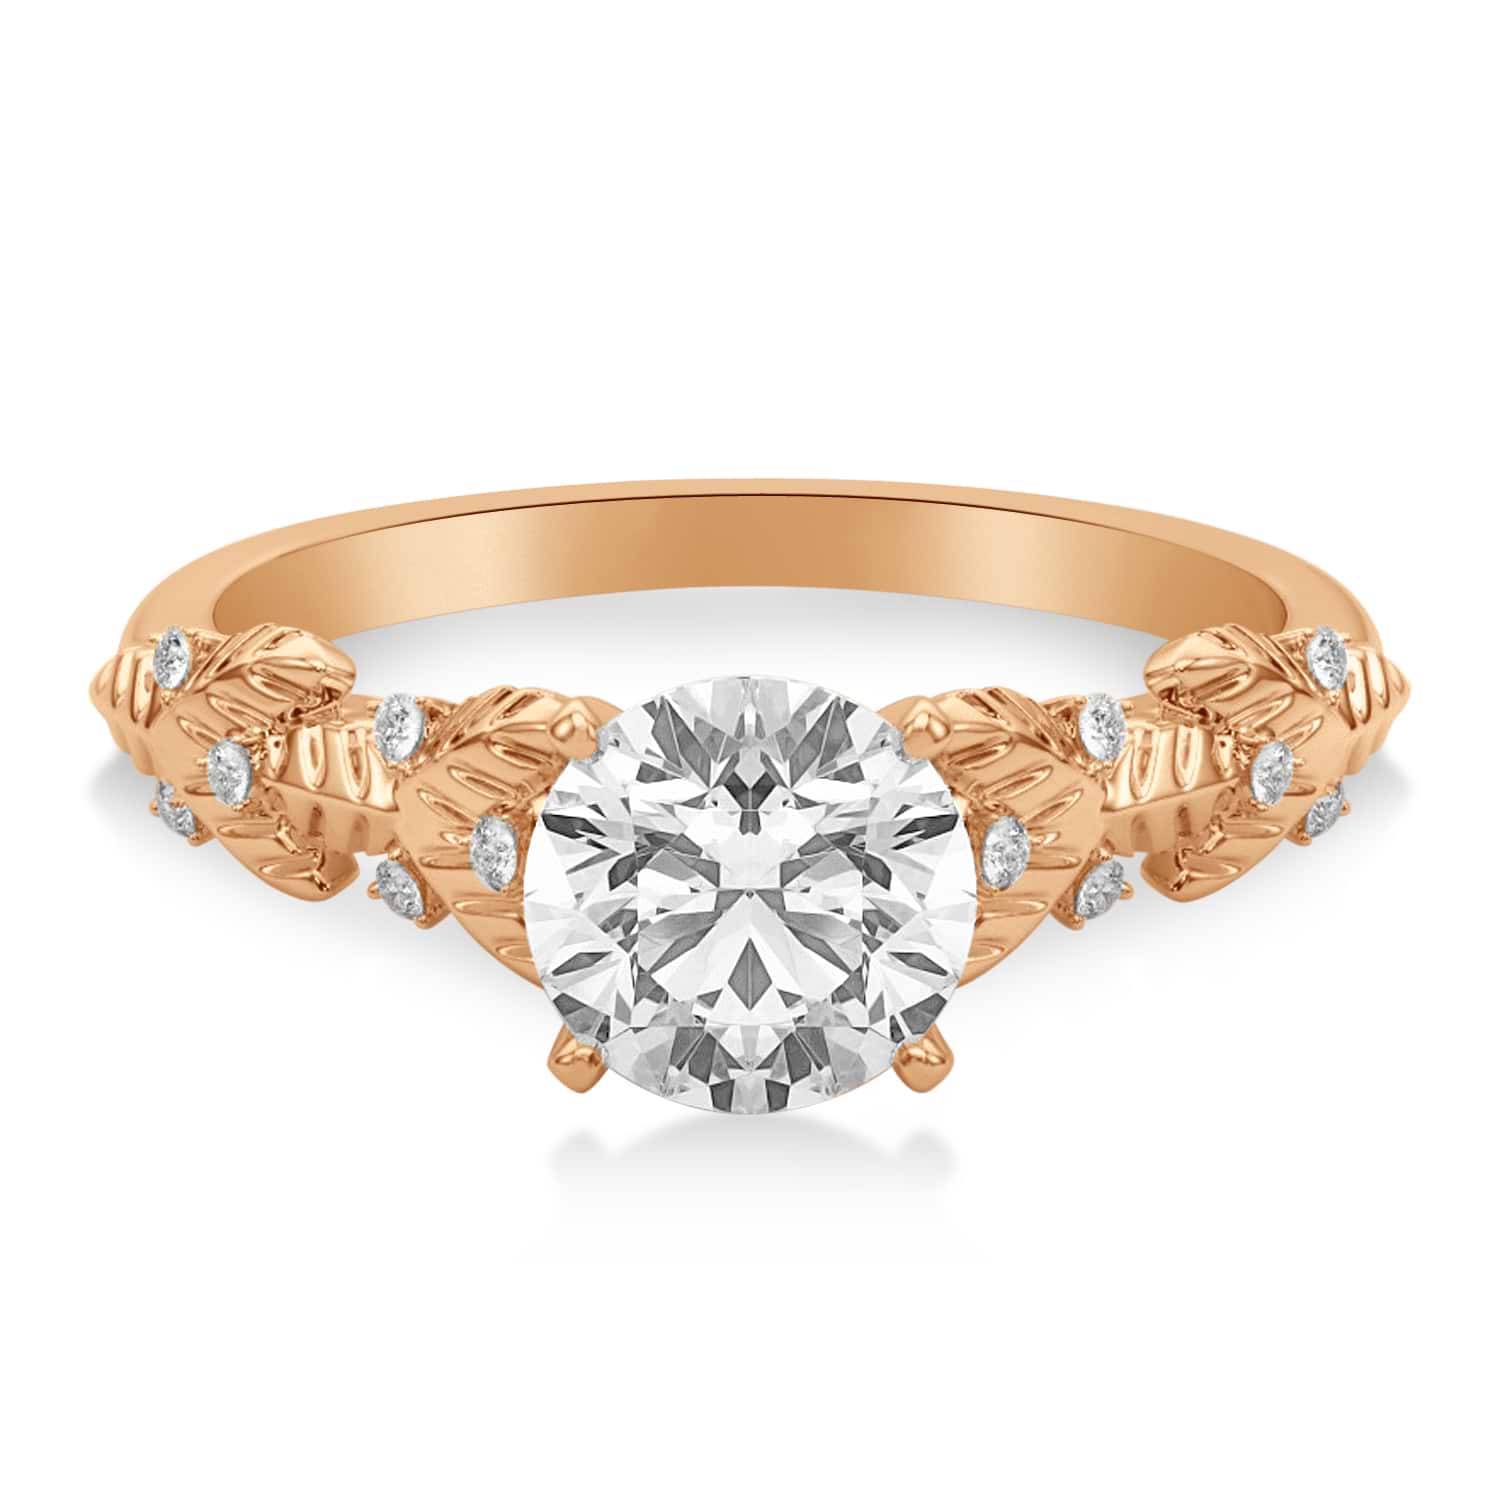 Diamond Floral Vine Engagement Ring 14k Rose Gold (0.05ct)